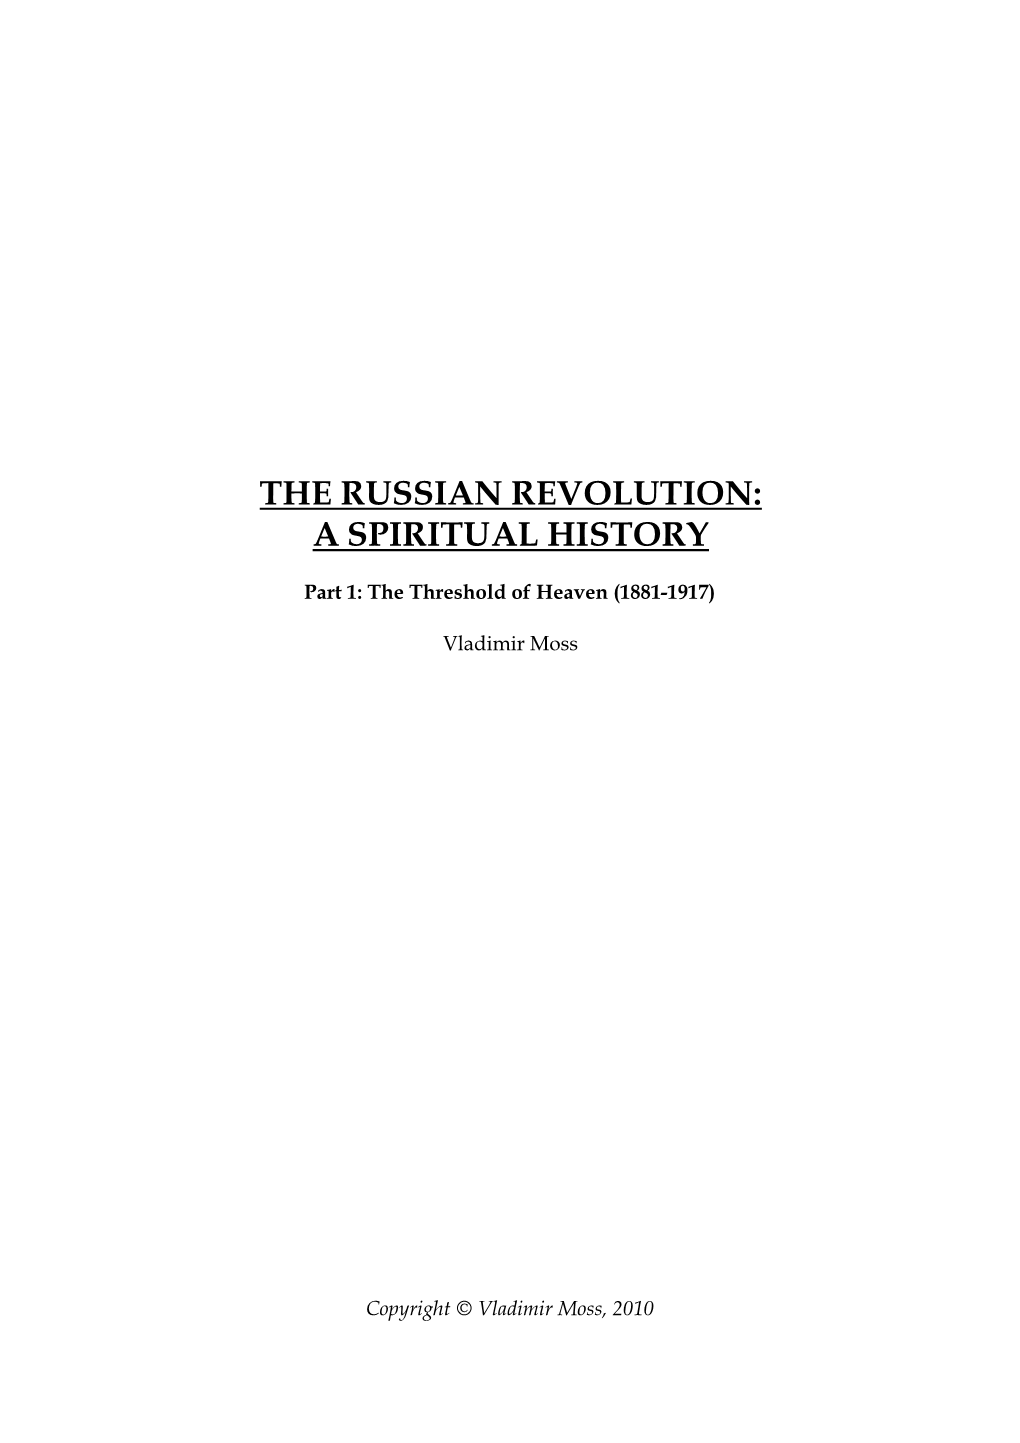 The Russian Revolution: a Spiritual History